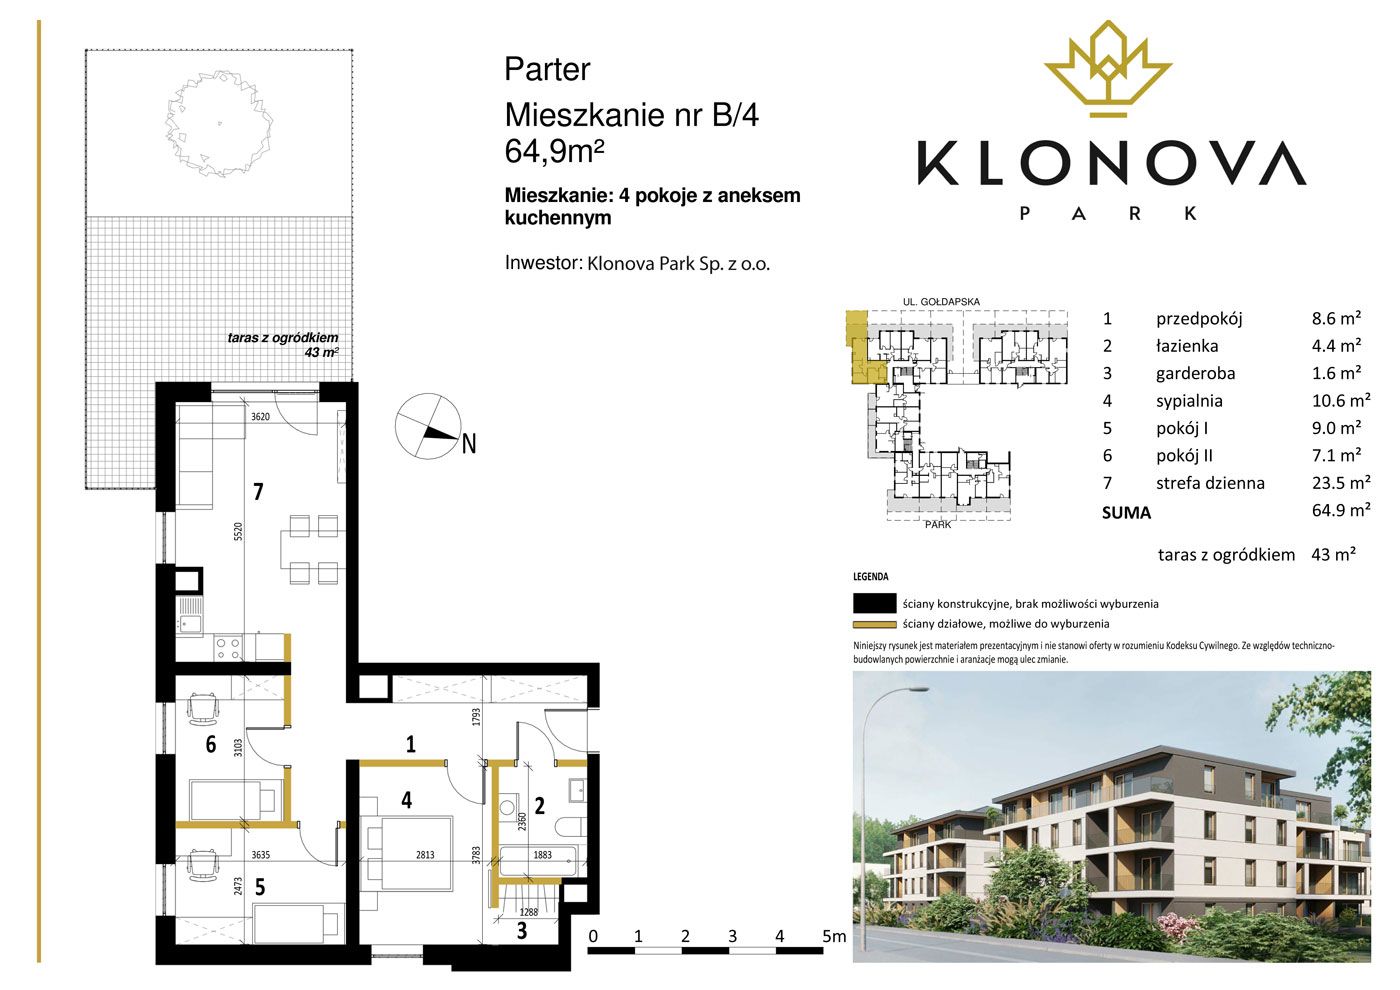 Apartamenty Klonova Park - Plan mieszkania B/4